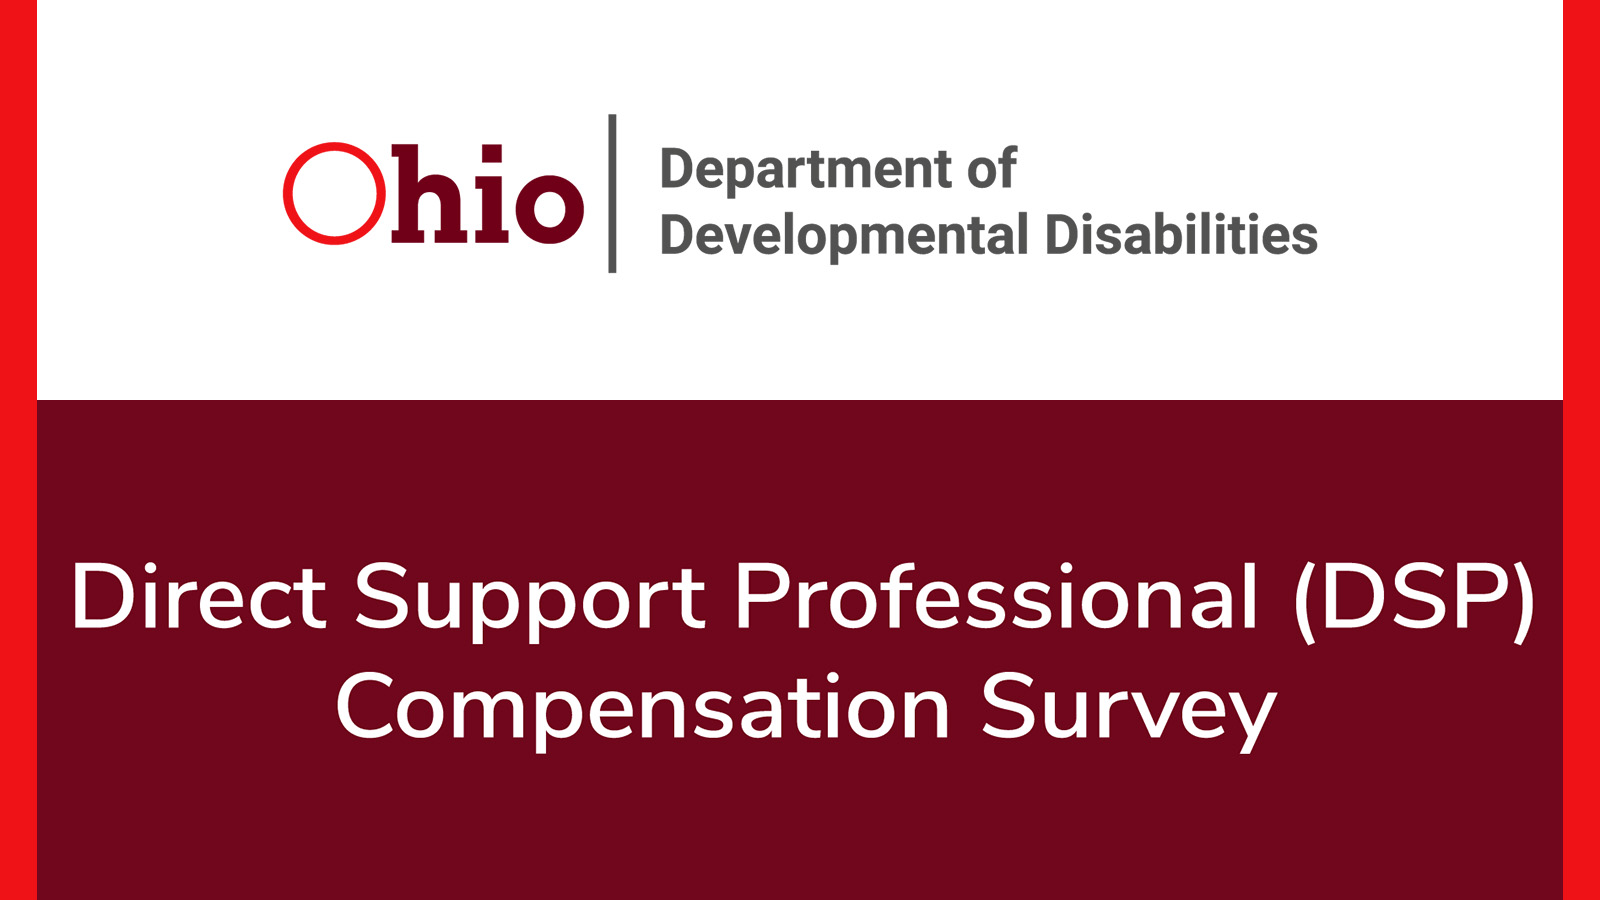 Direct Support Professional Compensation Survey